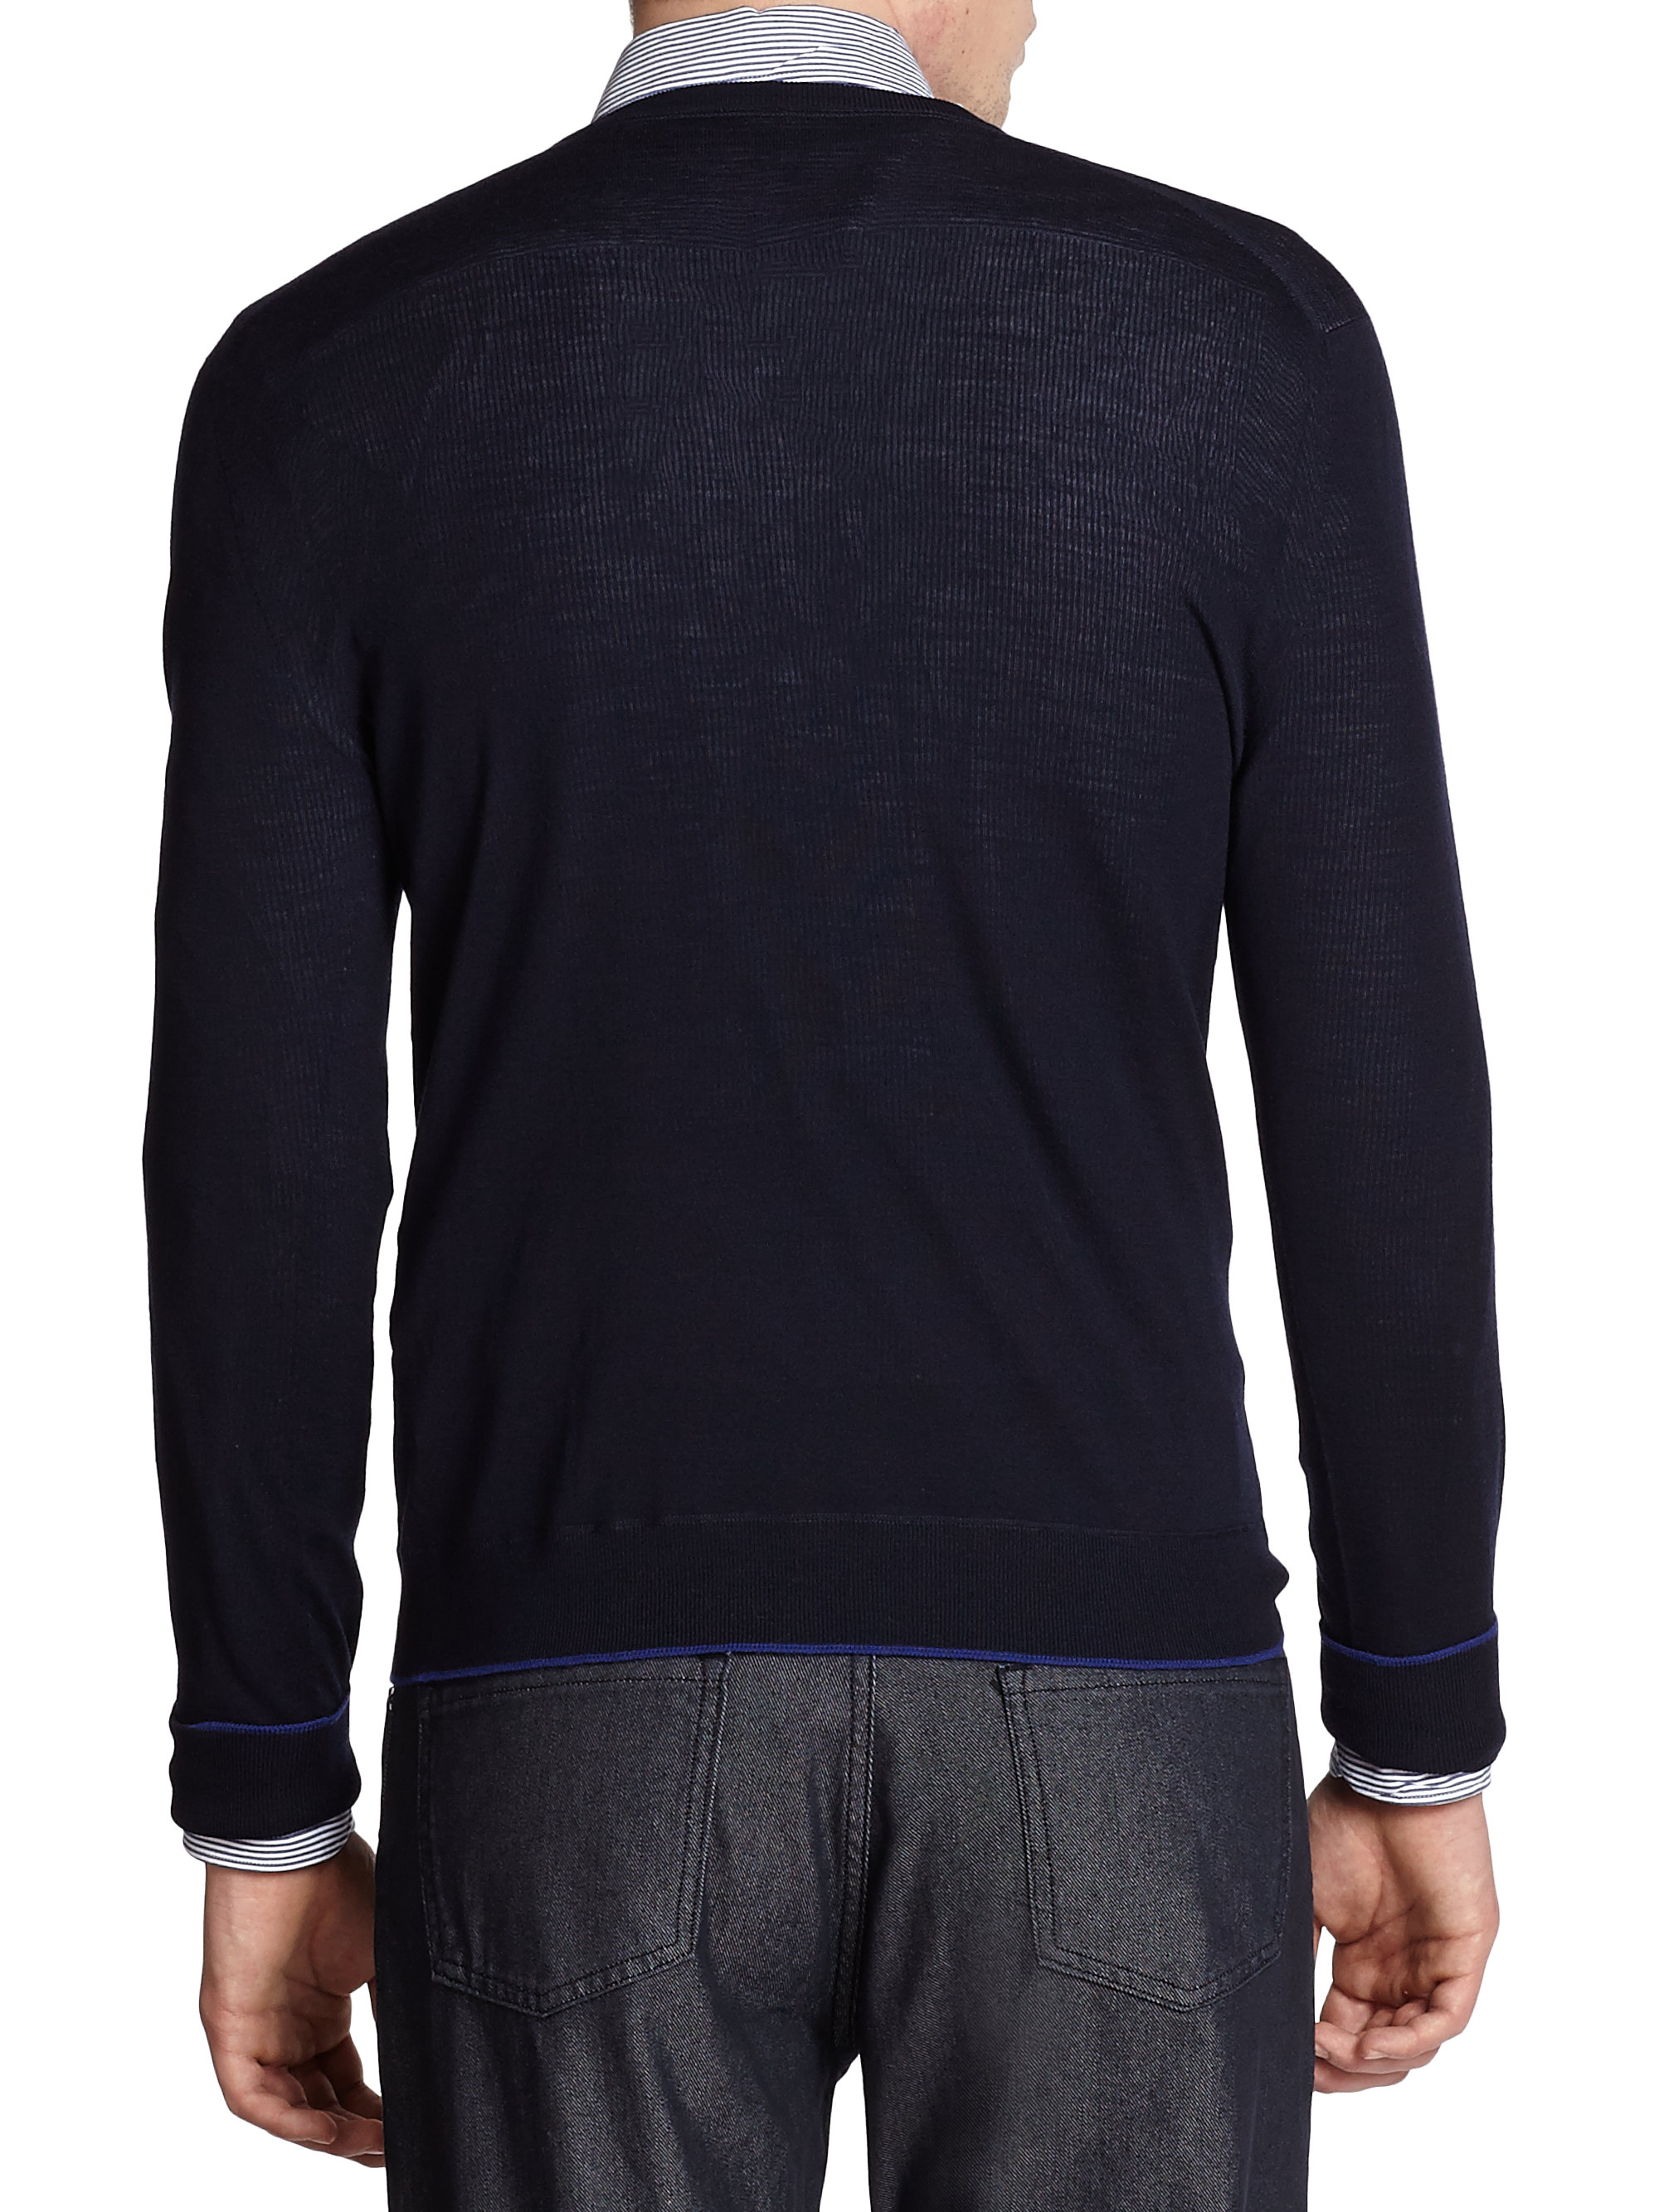 Lyst - Z Zegna Mercerized Cotton Crewneck Sweater in Blue for Men